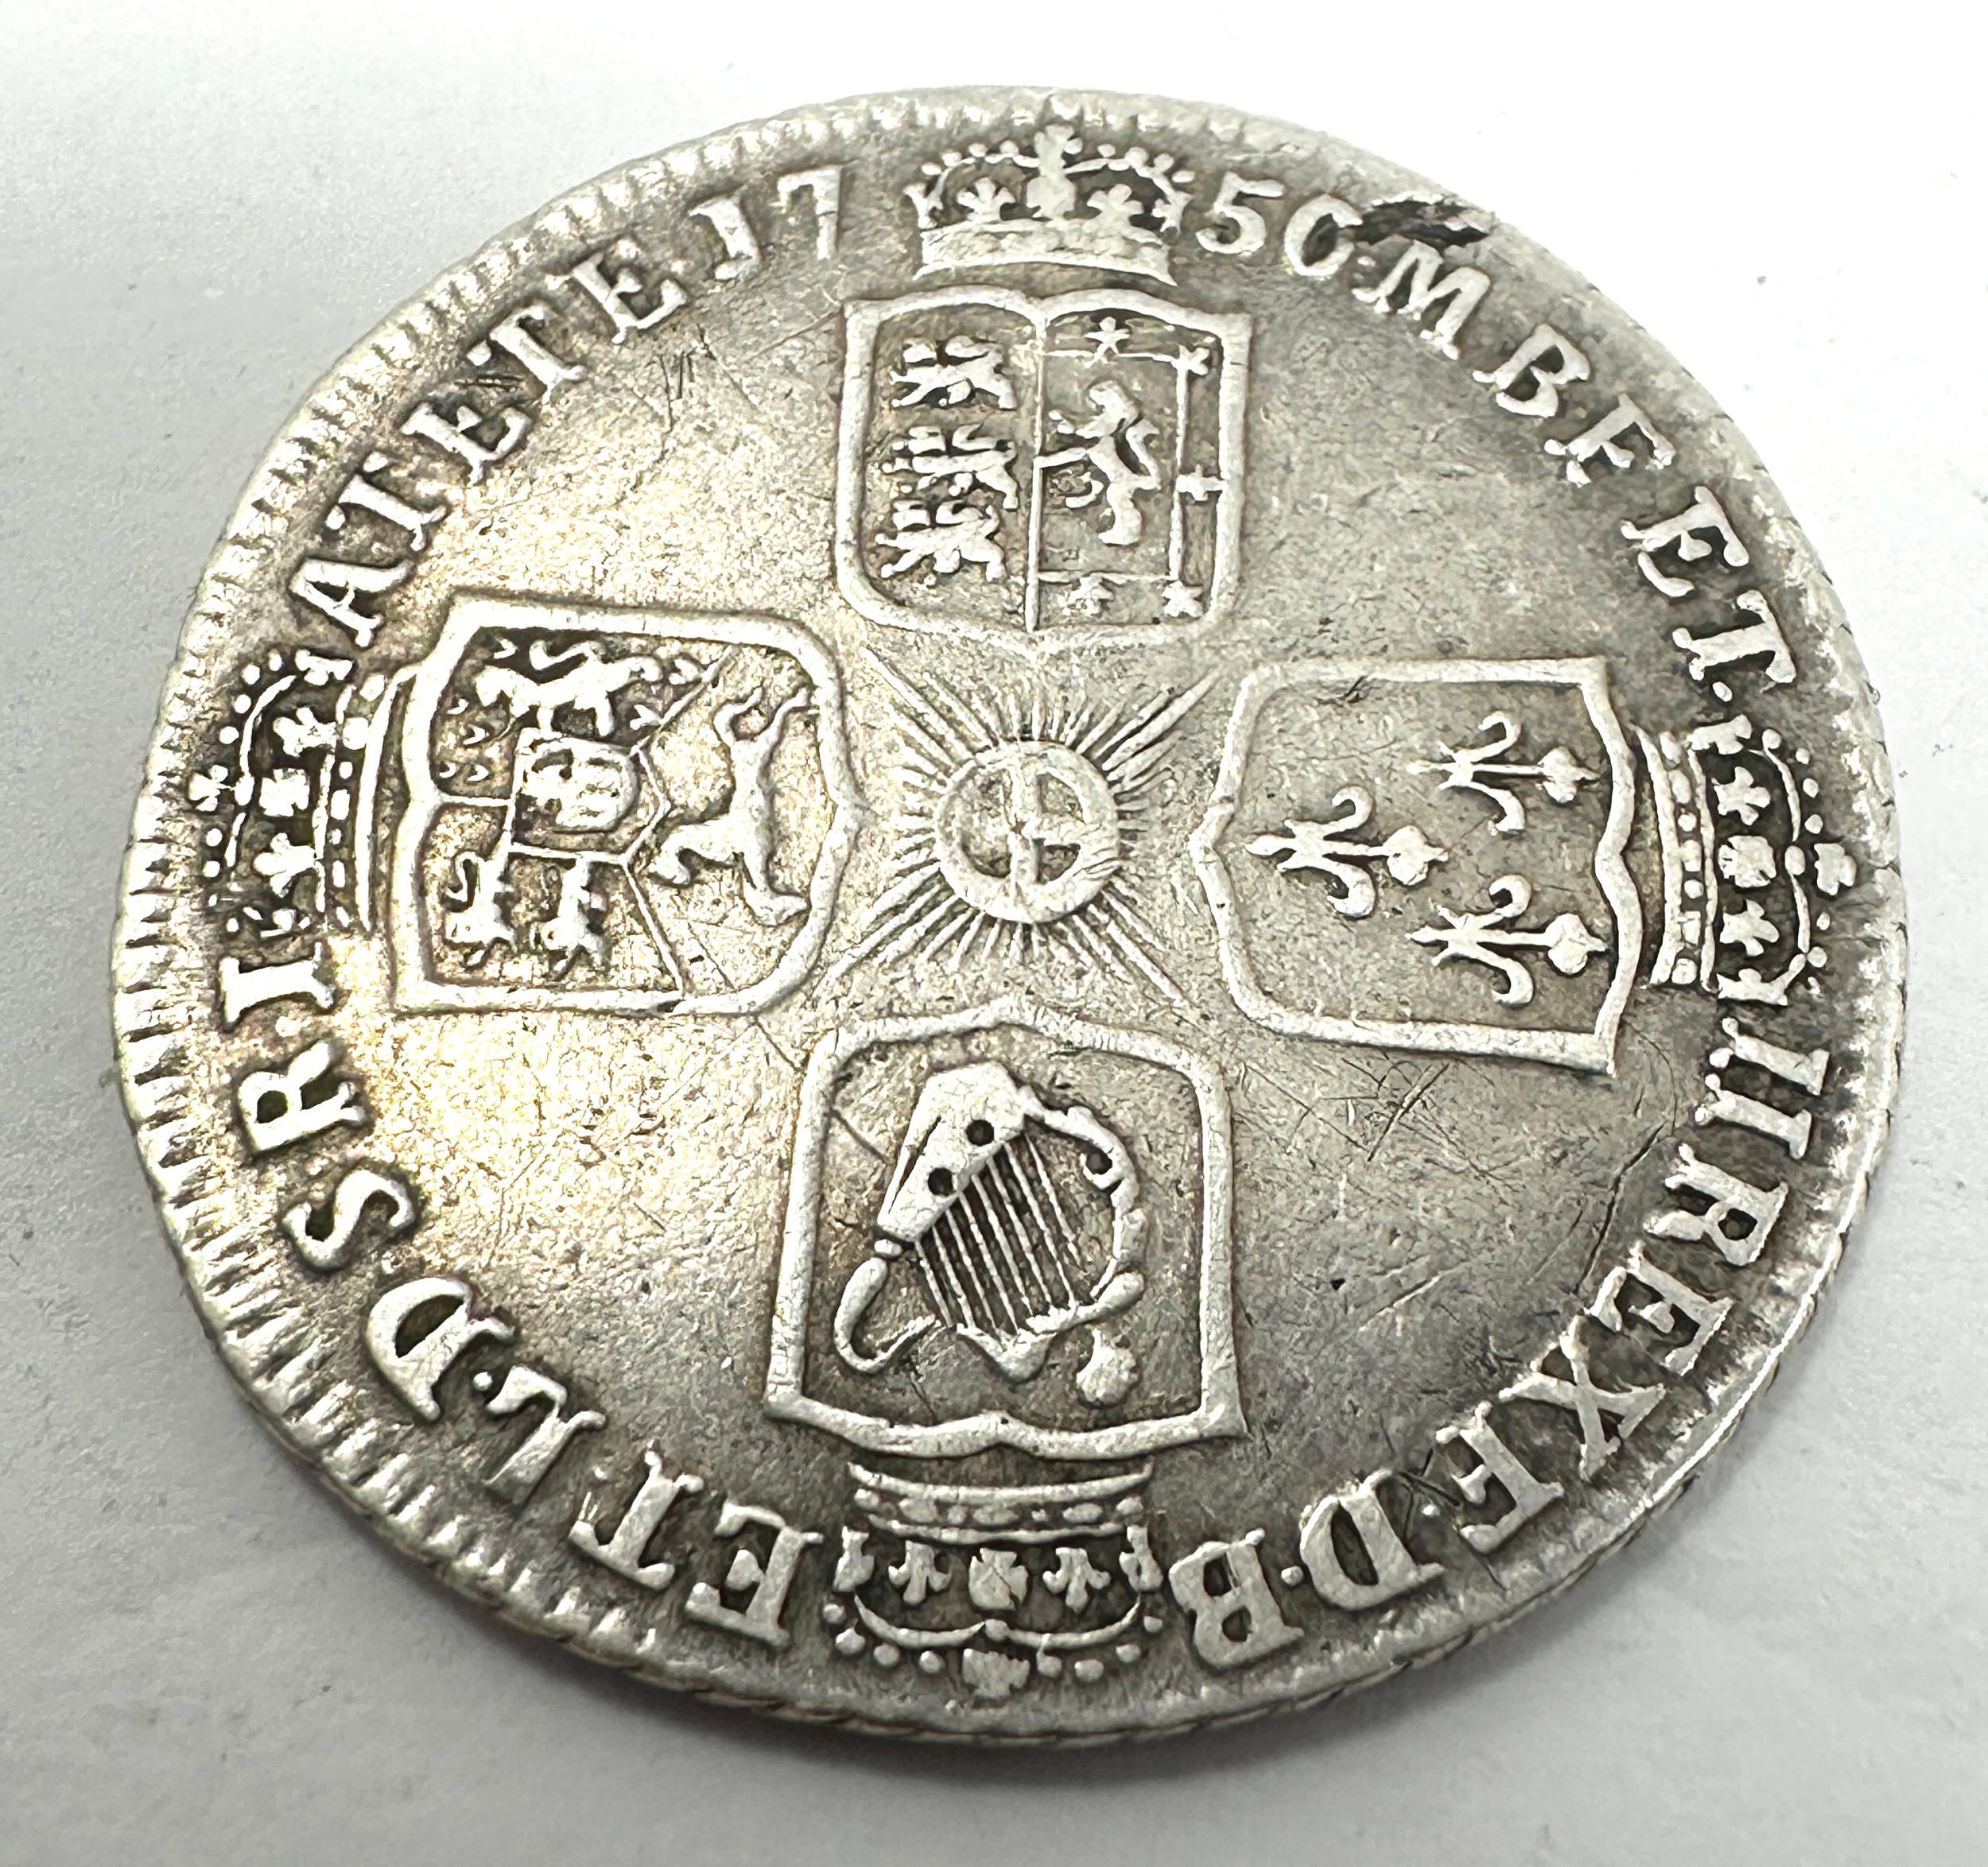 George II 1750 Shilling - Image 2 of 2